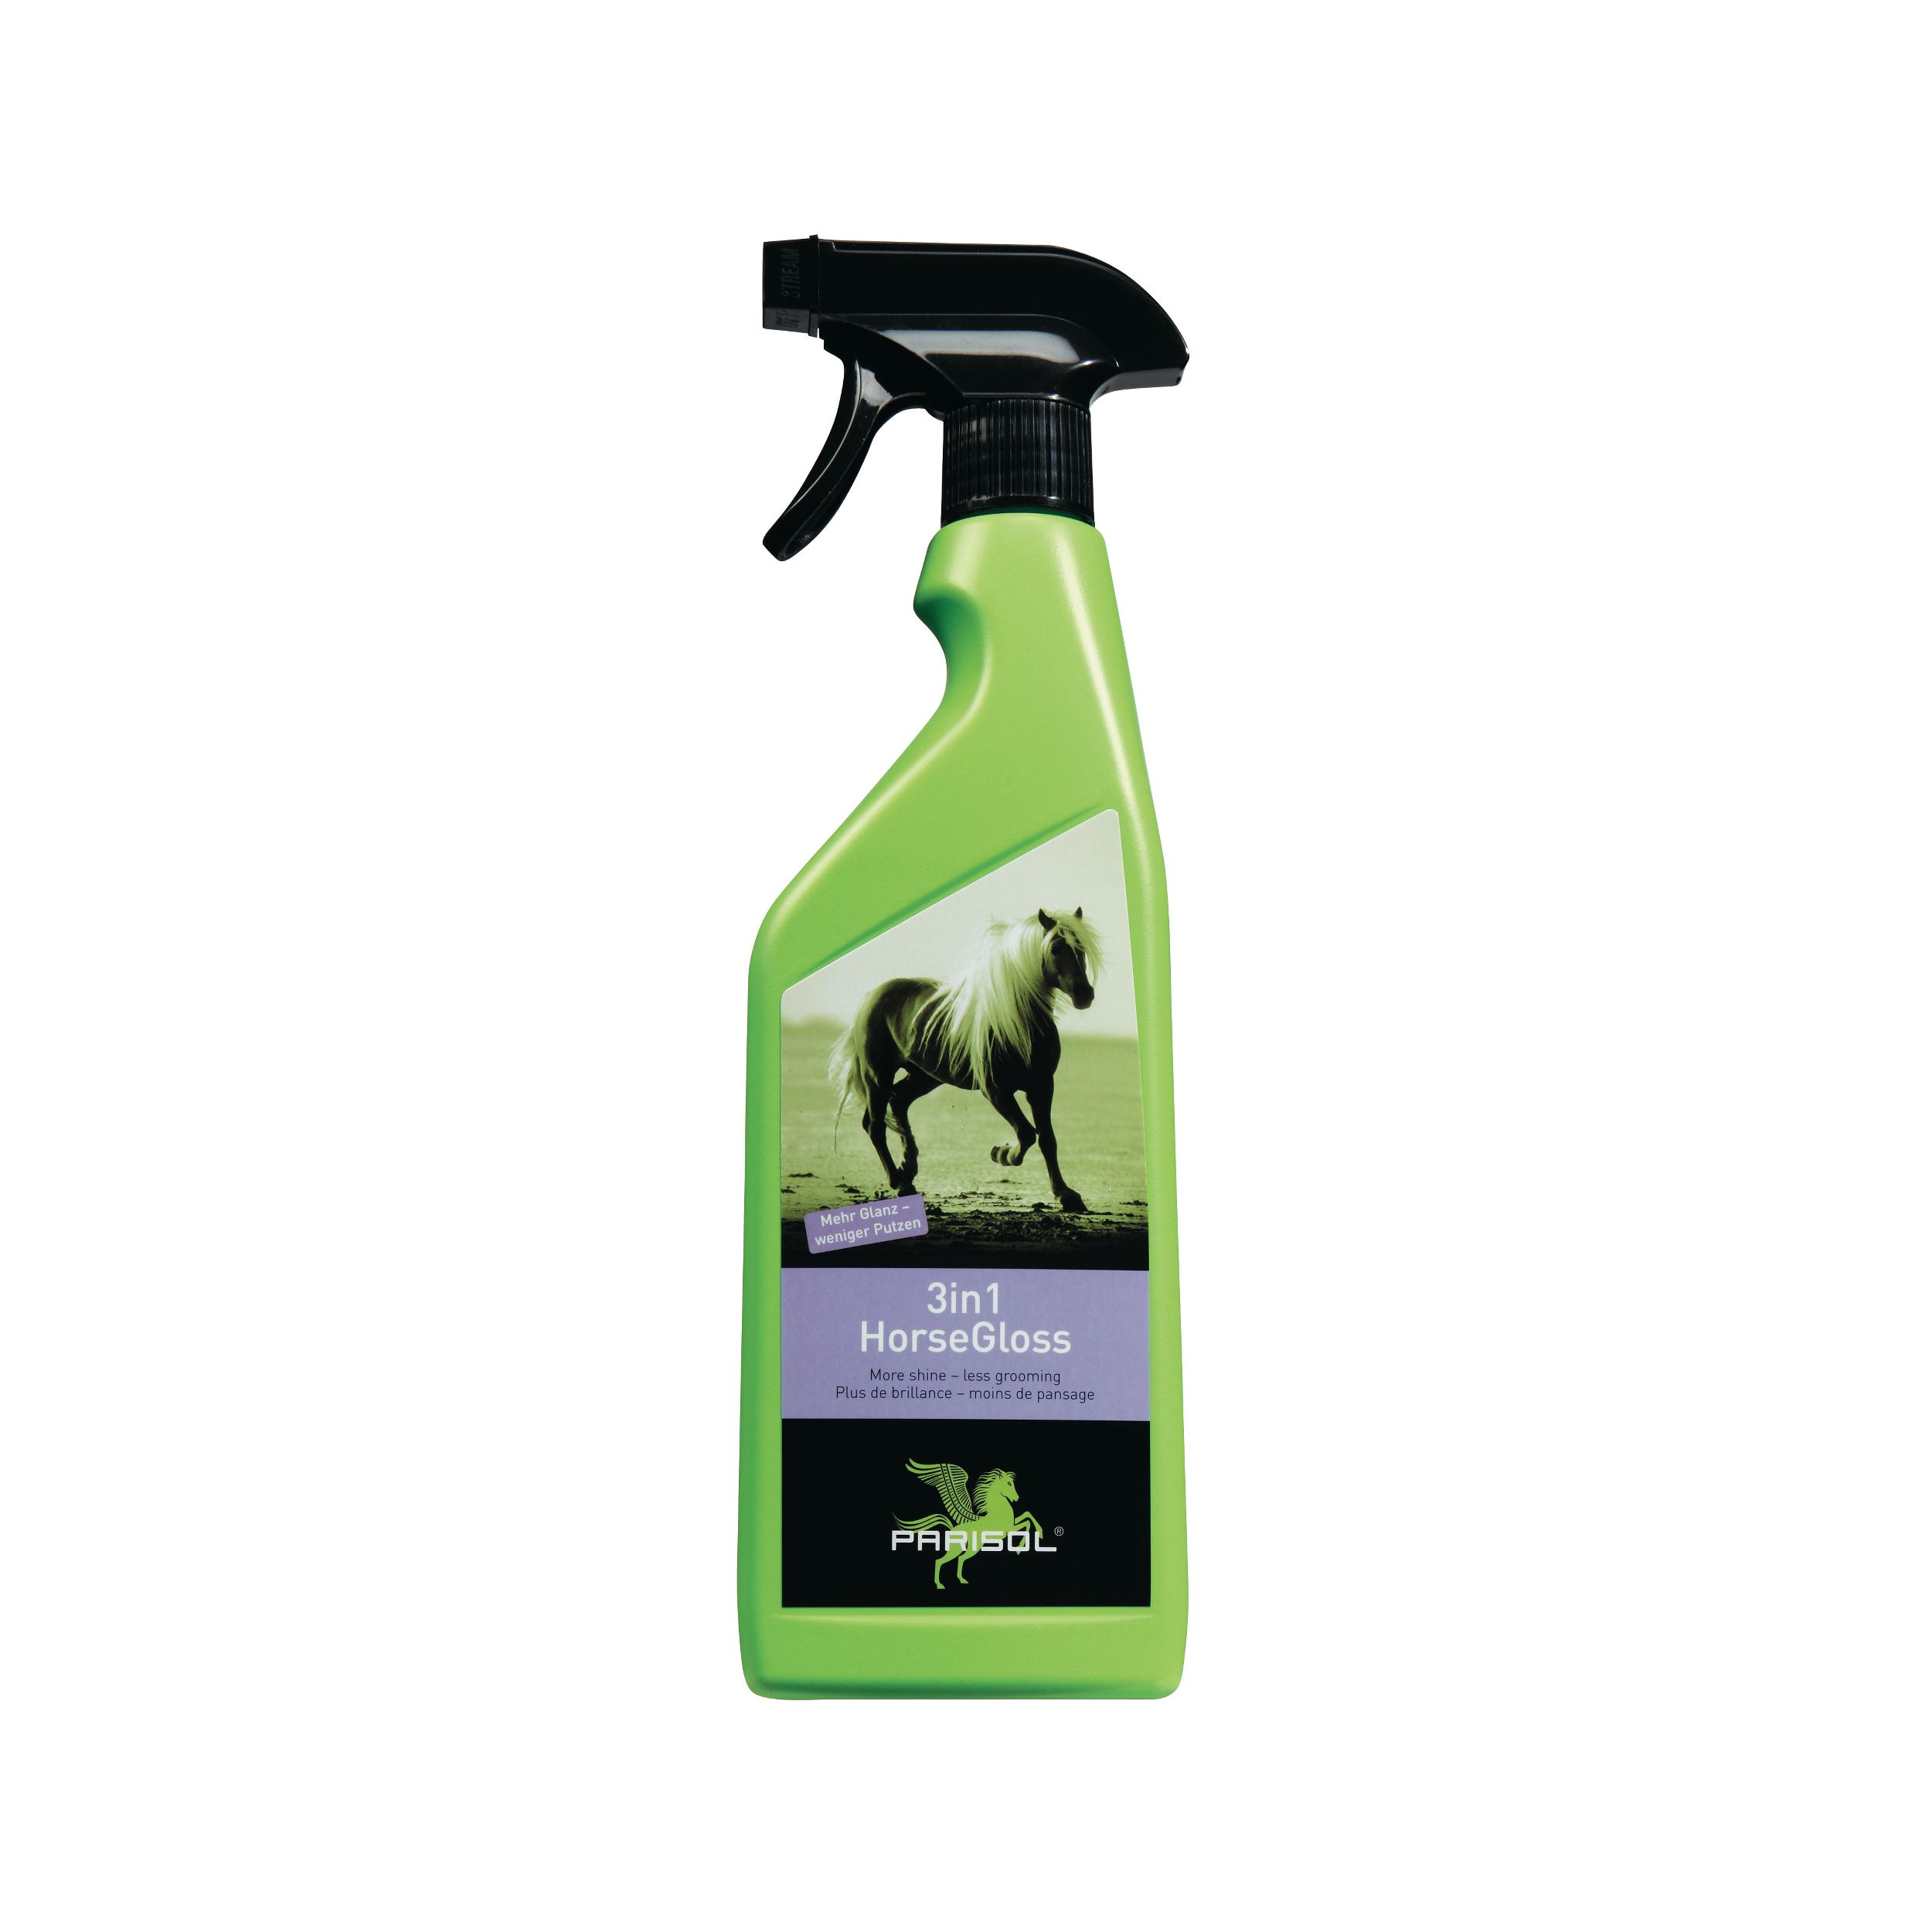 Parisol Horse Gloss 3in1 750 ml